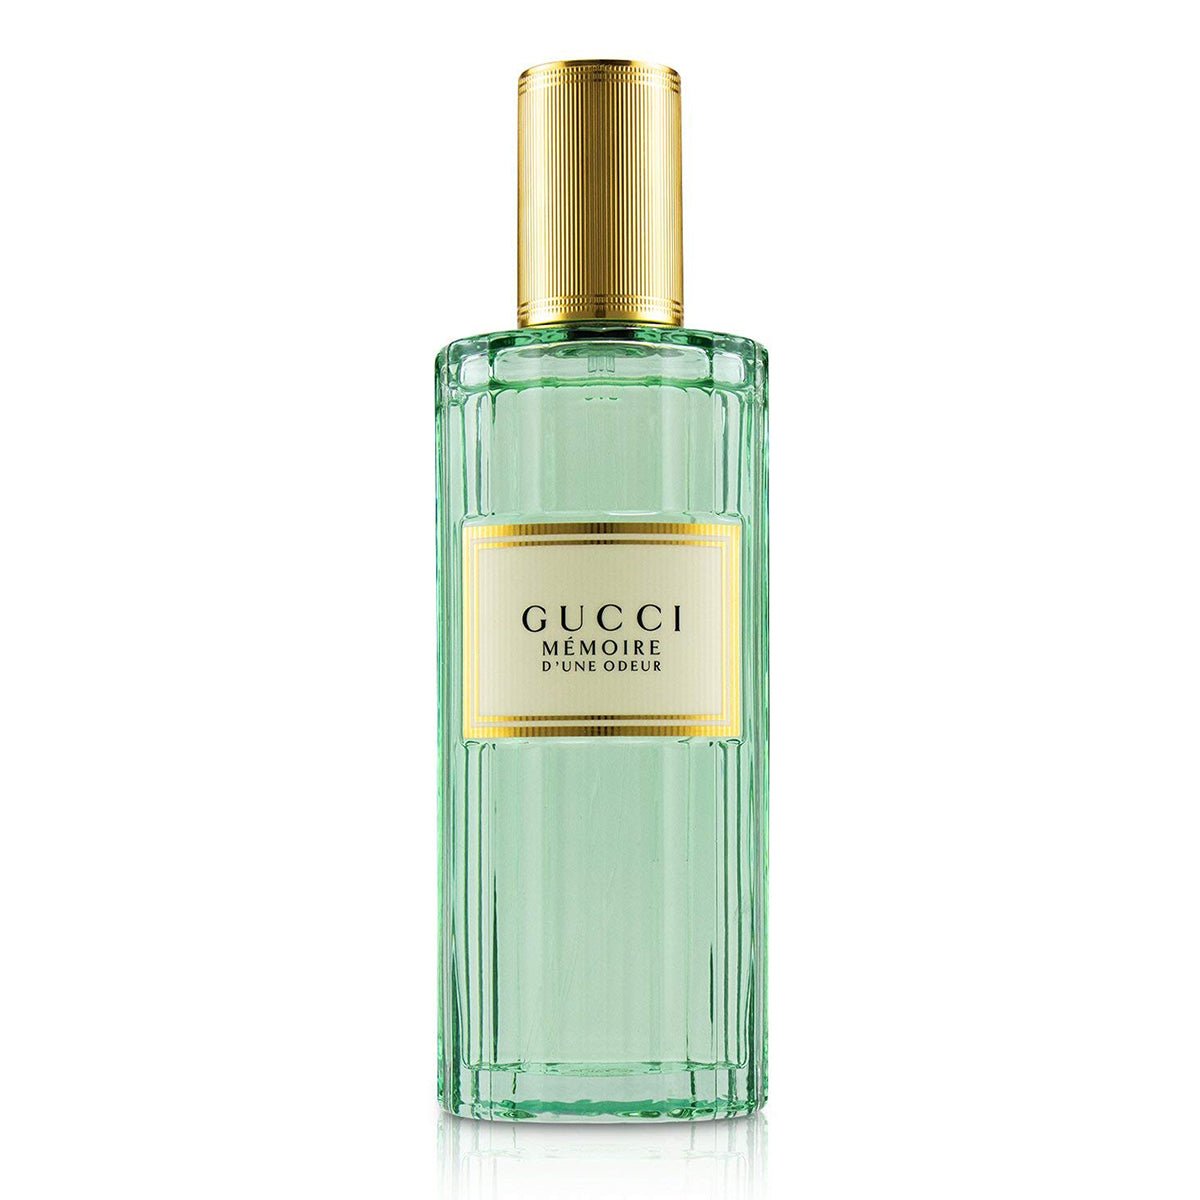 Gucci Memoire D'une Odeur Edp Spray For Women 60ml-Perfume - AllurebeautypkGucci Memoire D'une Odeur Edp Spray For Women 60ml-Perfume